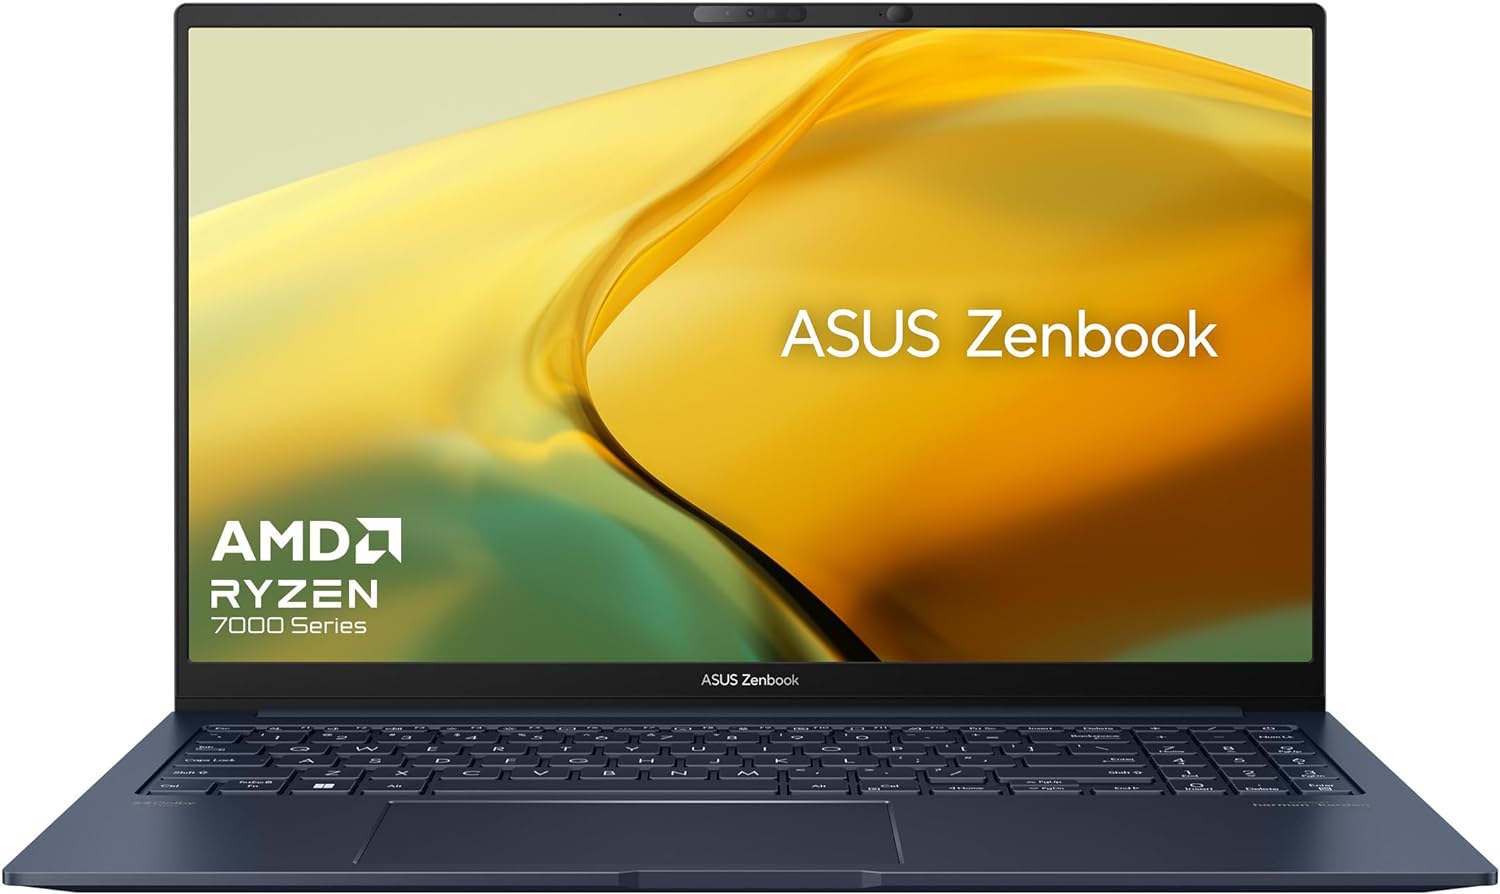 ASUS Zenbook 15 Laptop 156 FHD Display AMD Ryzen 5 753 - Alaska - Anchorage ID1514457